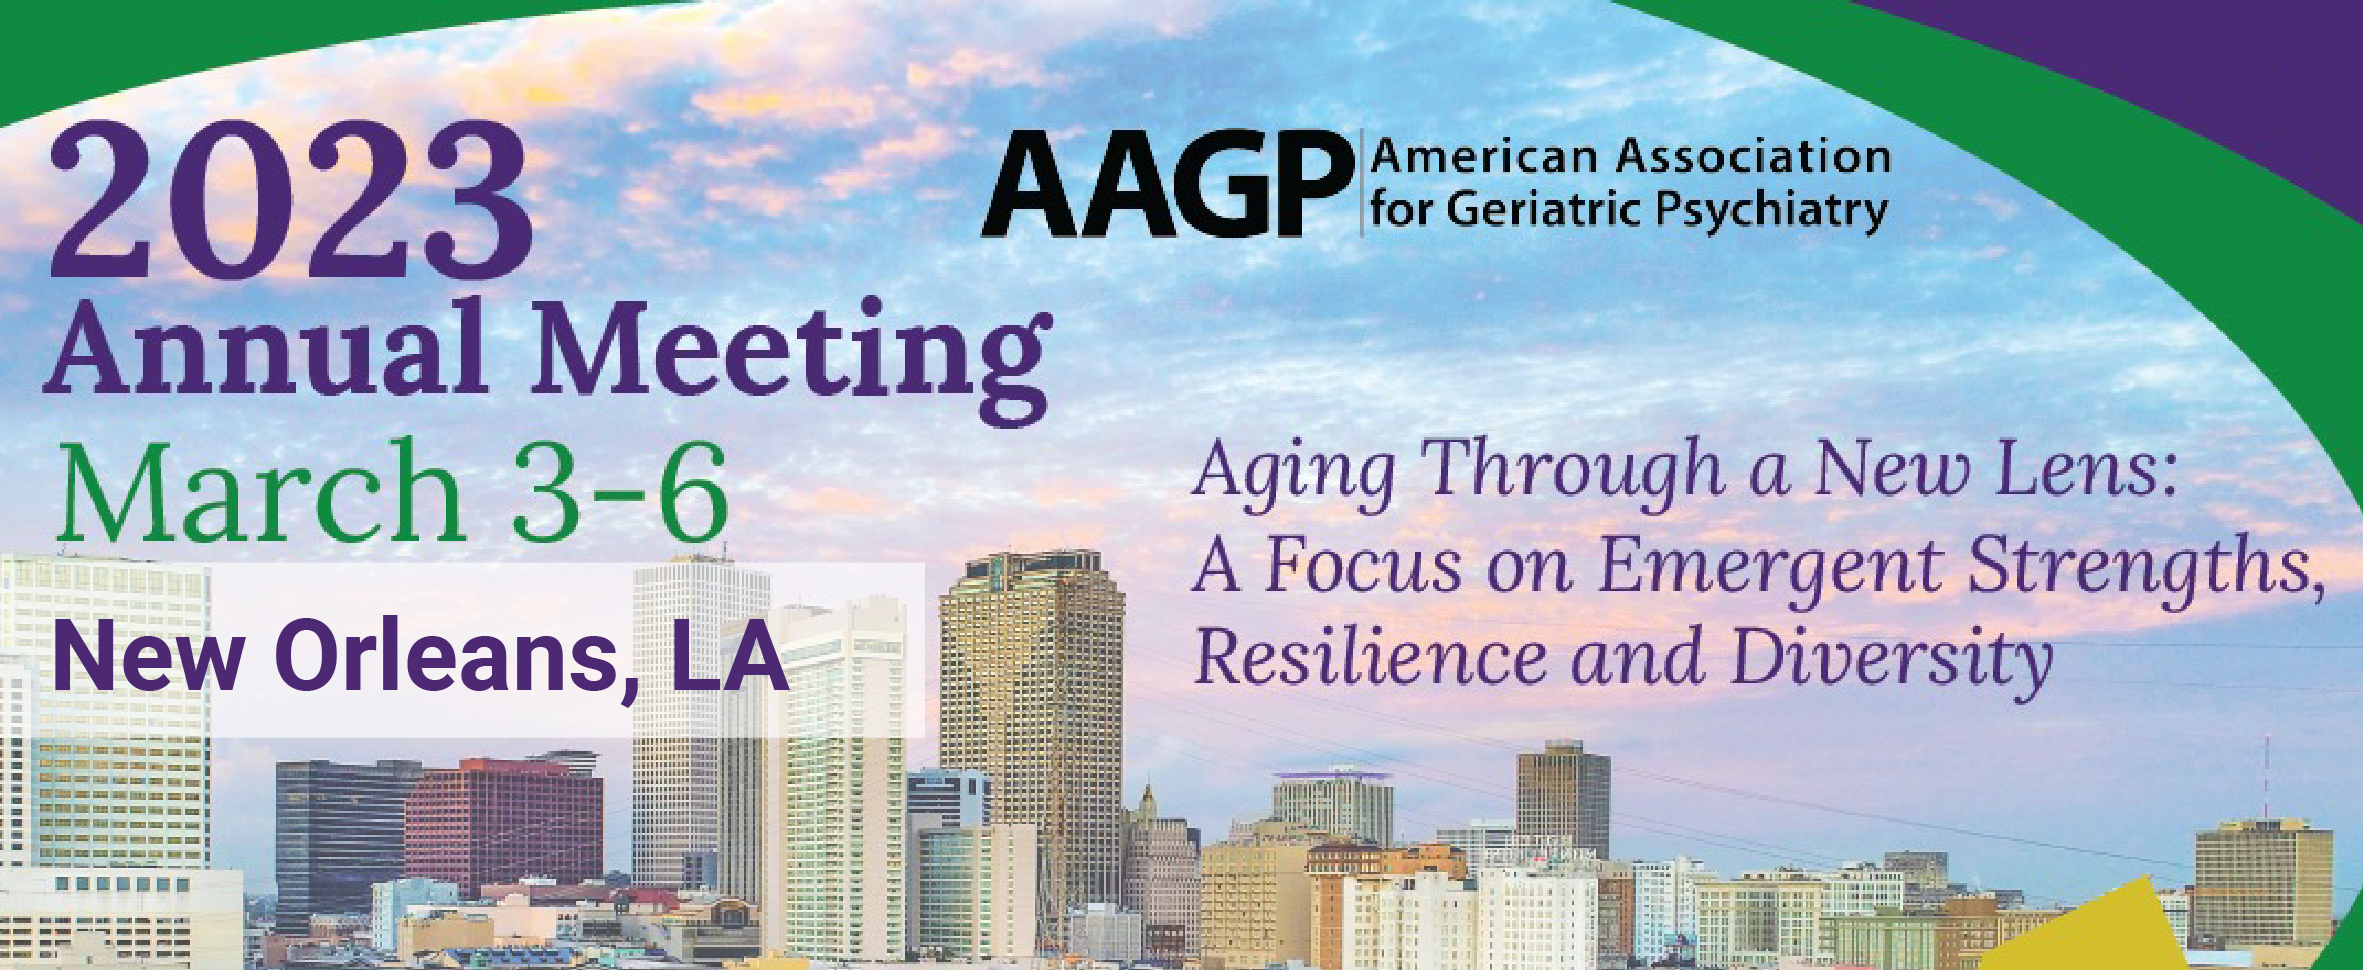 American Association for Geriatrics Psychiatry Annual Meeting - AAGP 2023